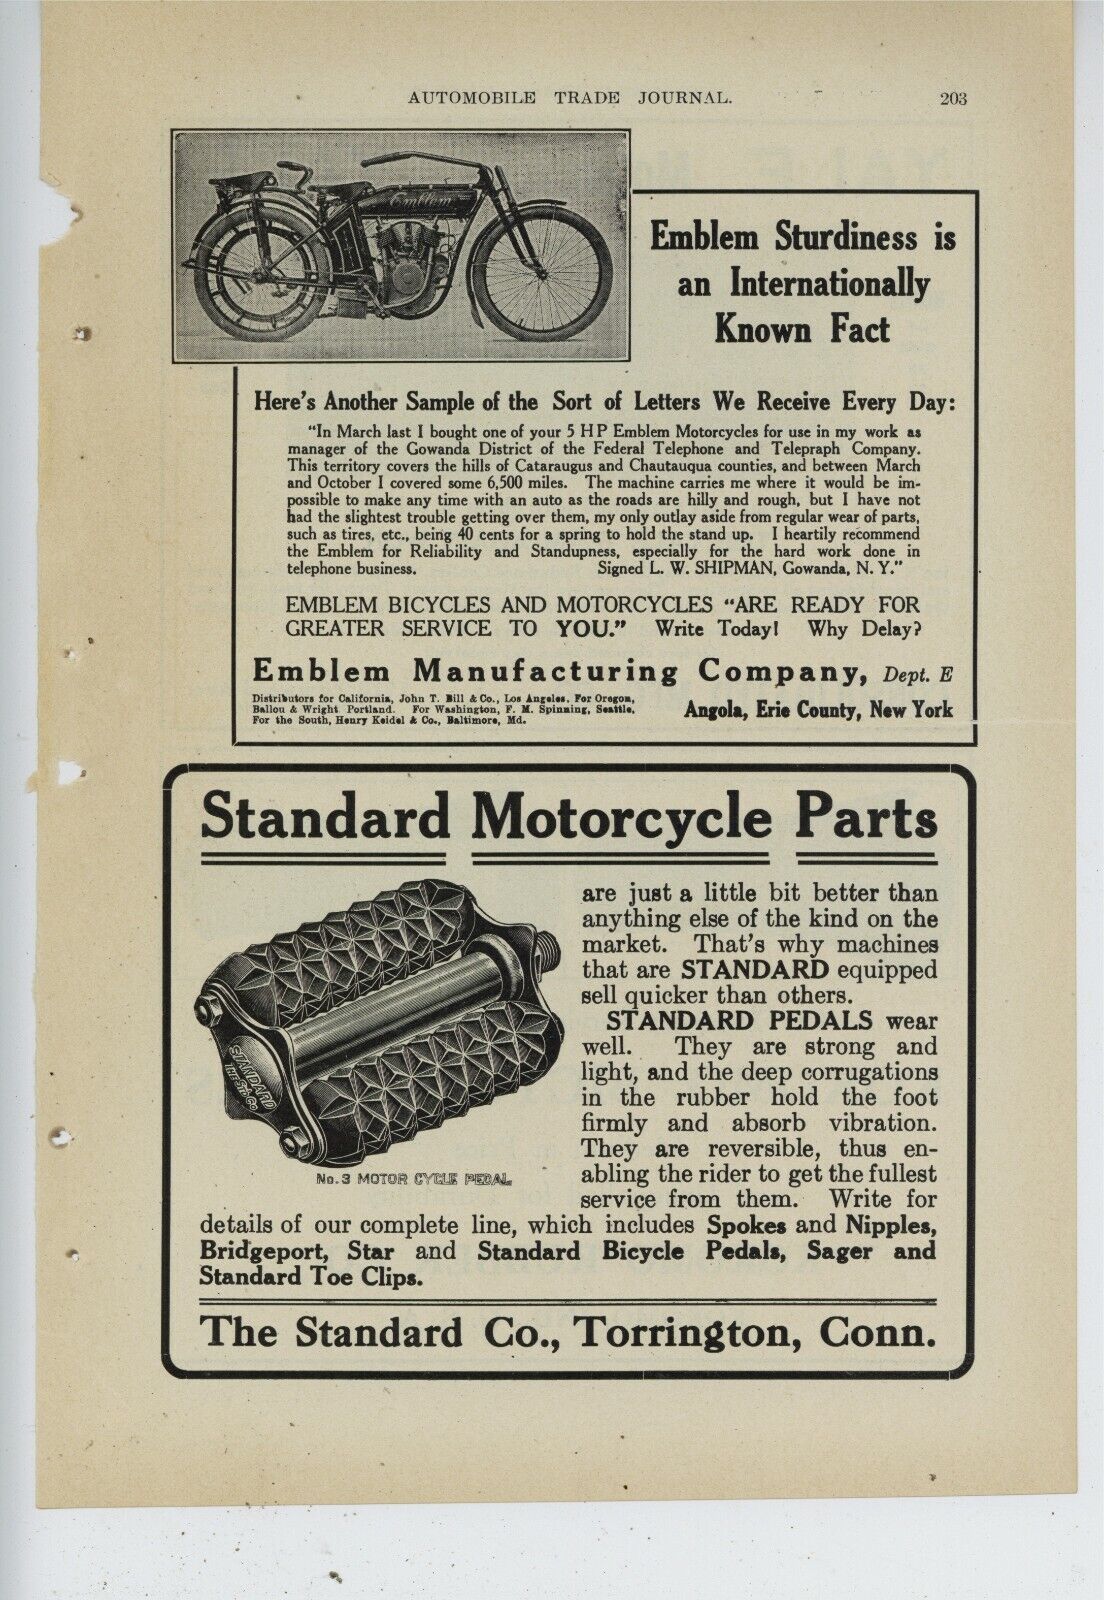 1911 Yale Motorcycles of Toledo, OhiO Ad: REV is Emblem MC of Angola, New York